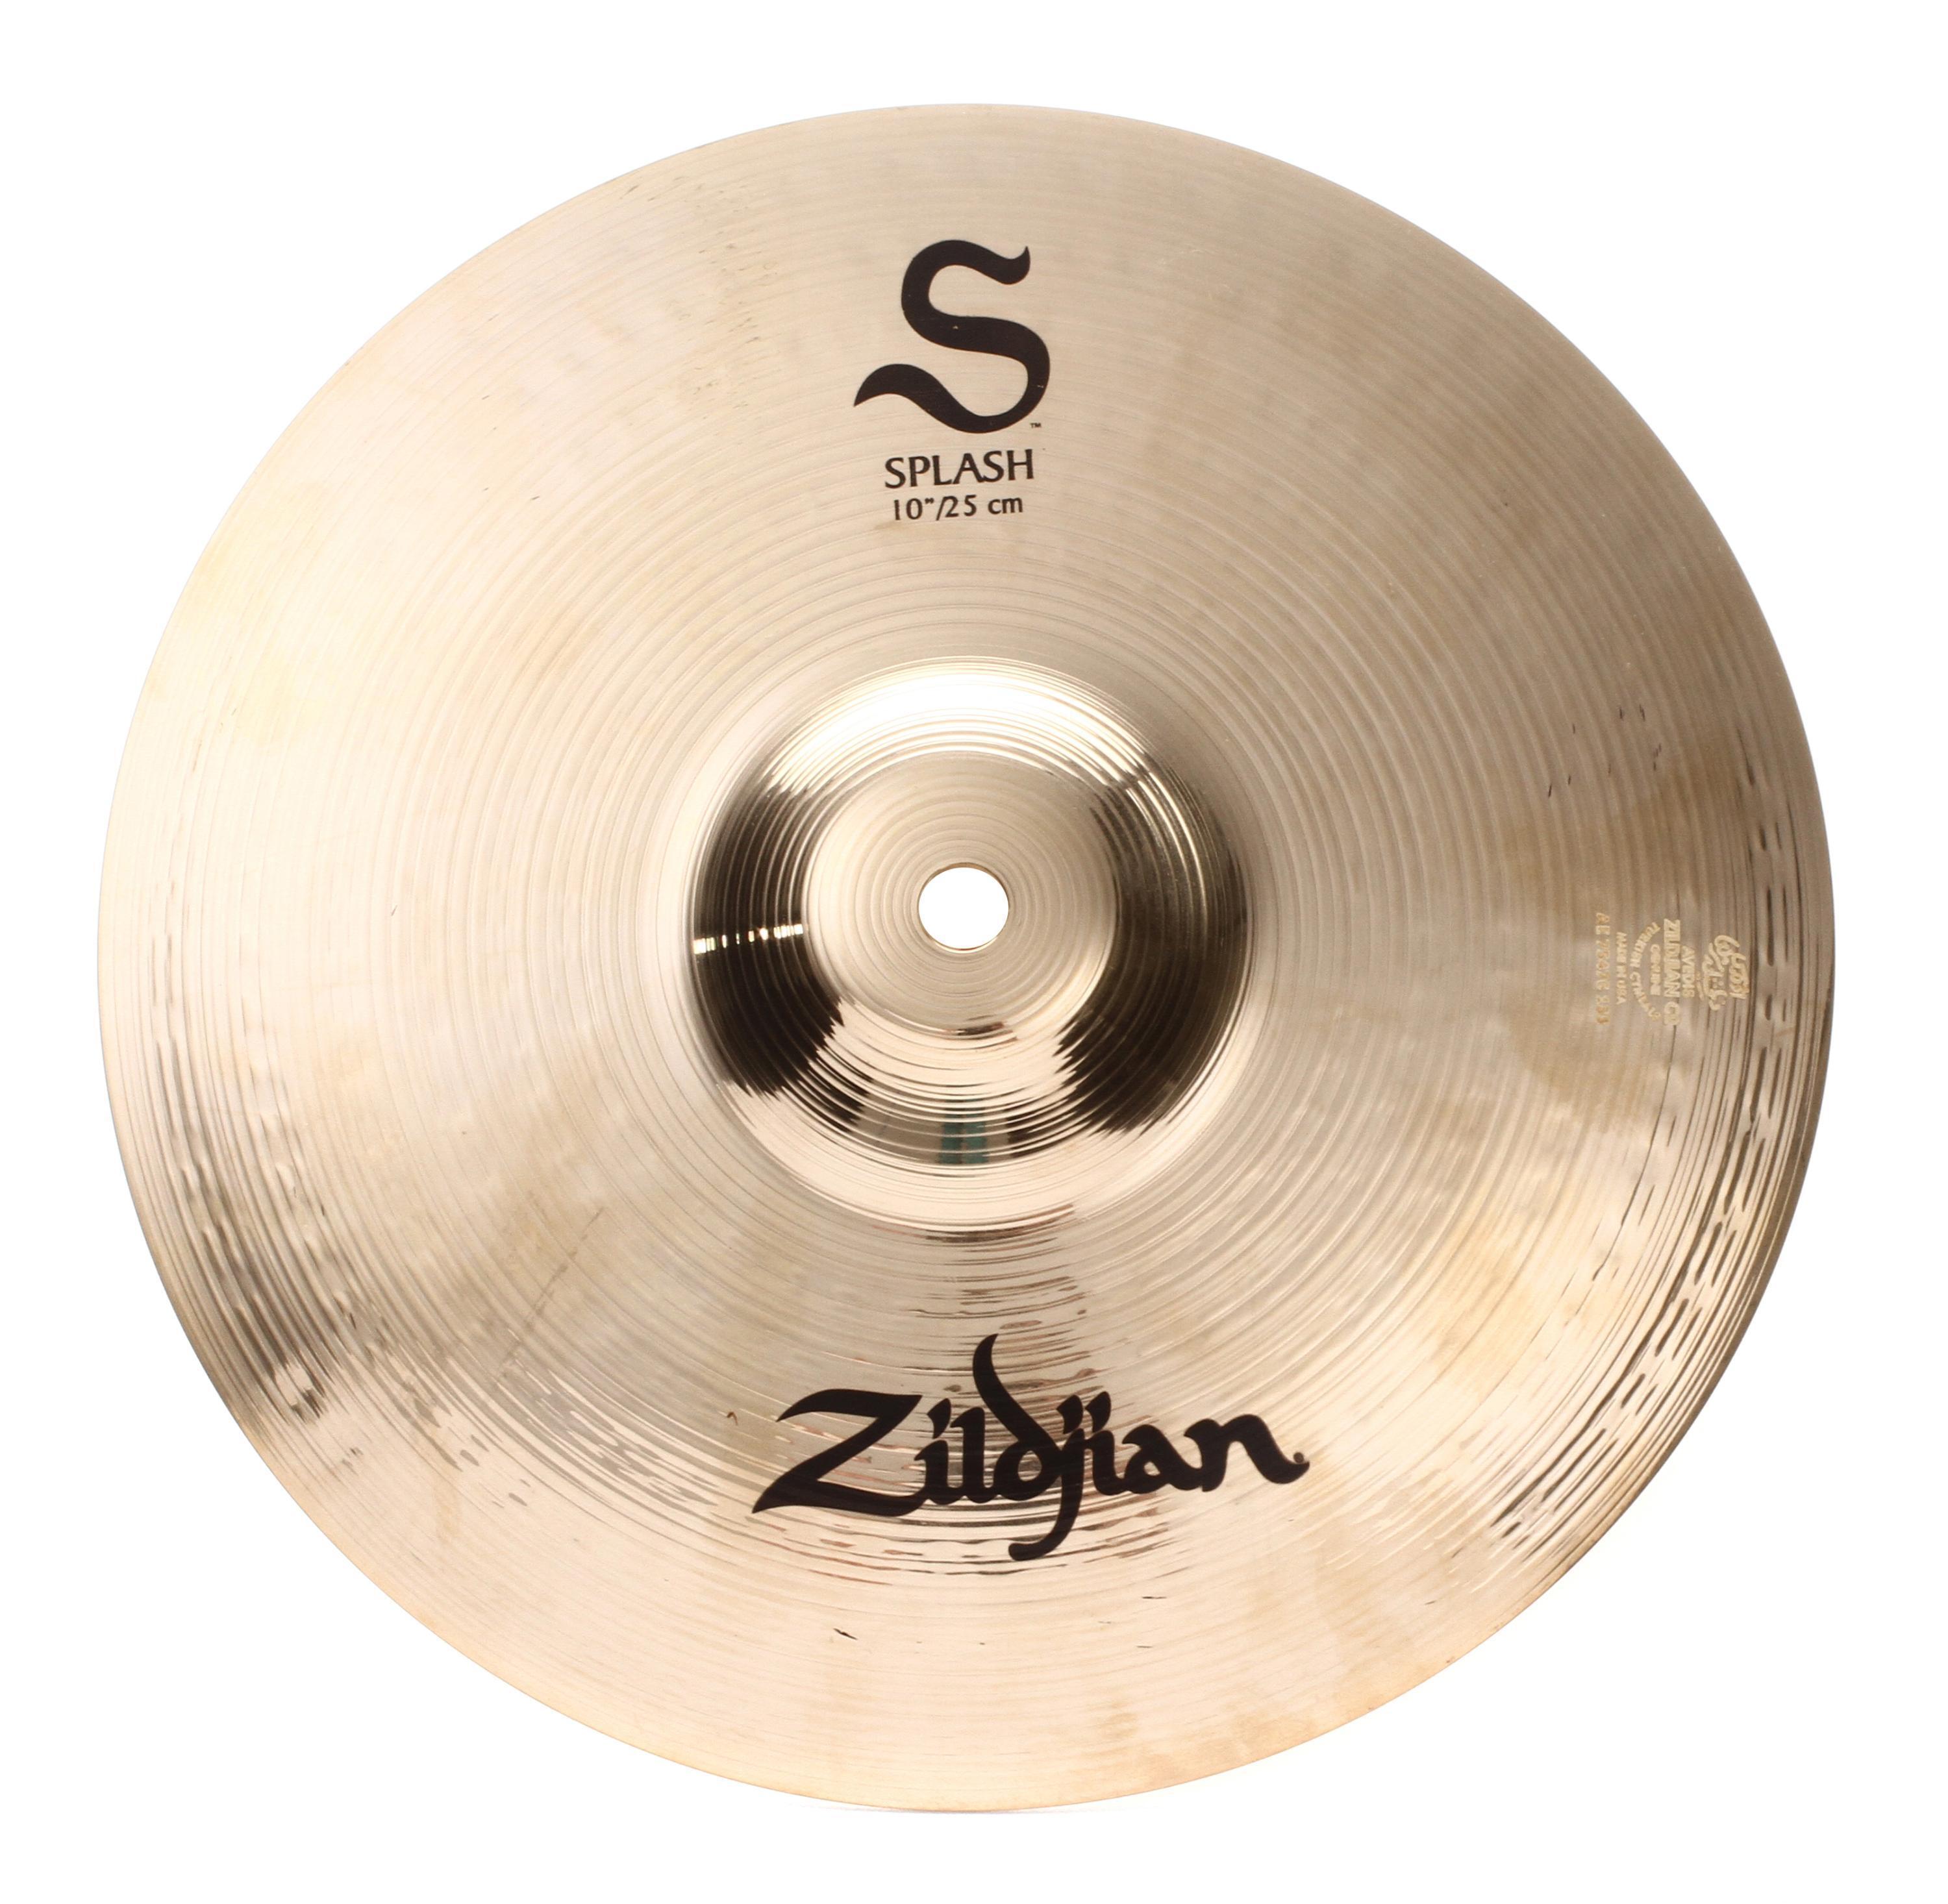 Zildjian 8 inch S Series Splash Cymbal | Sweetwater